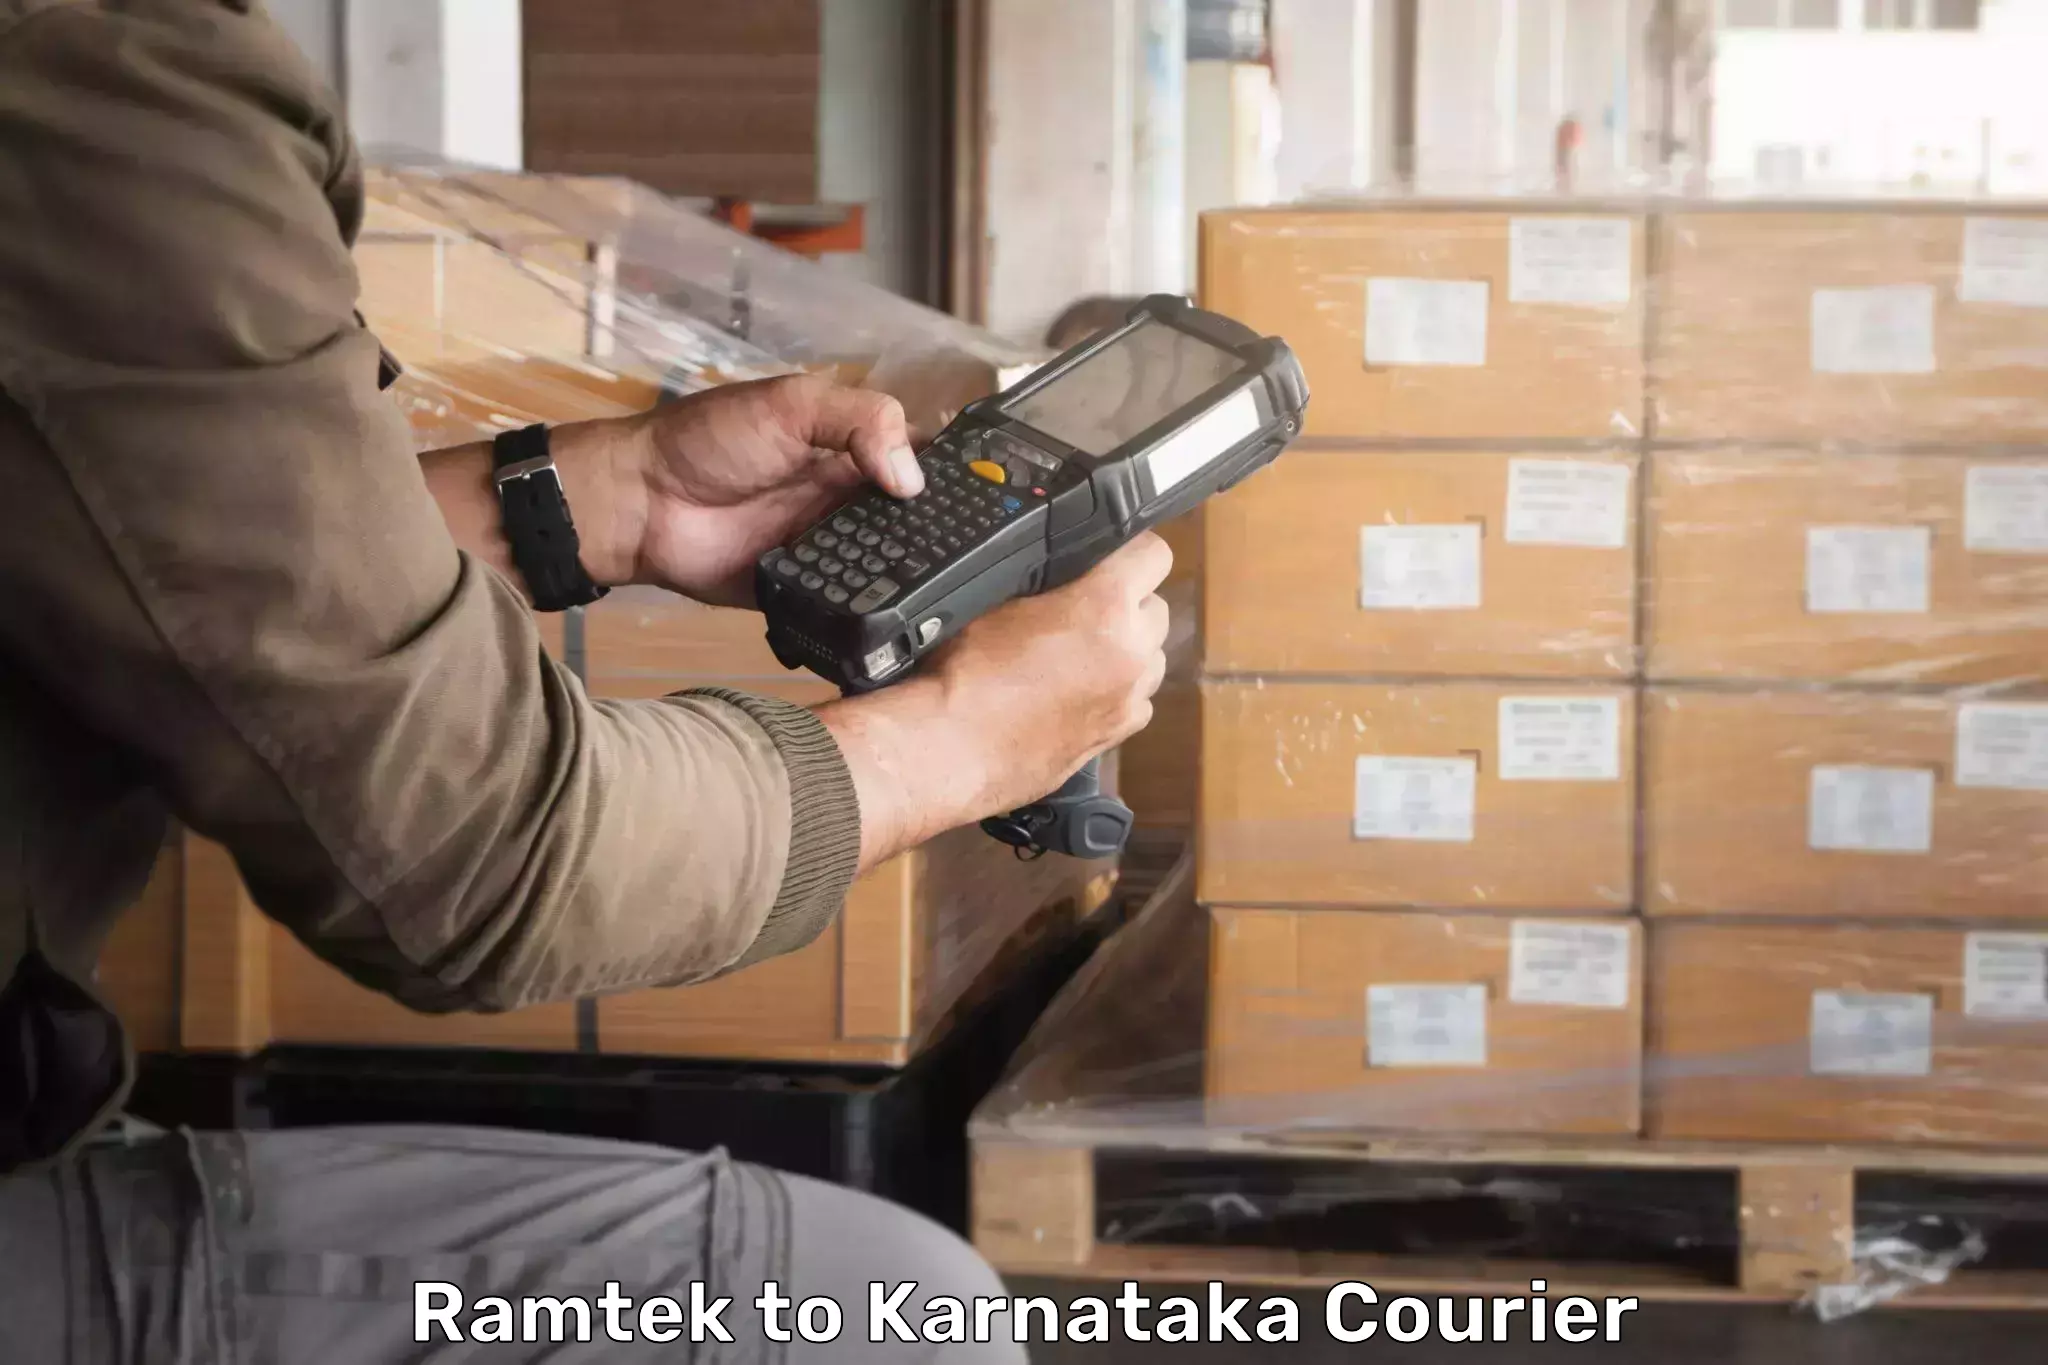 Remote area delivery Ramtek to Karnataka